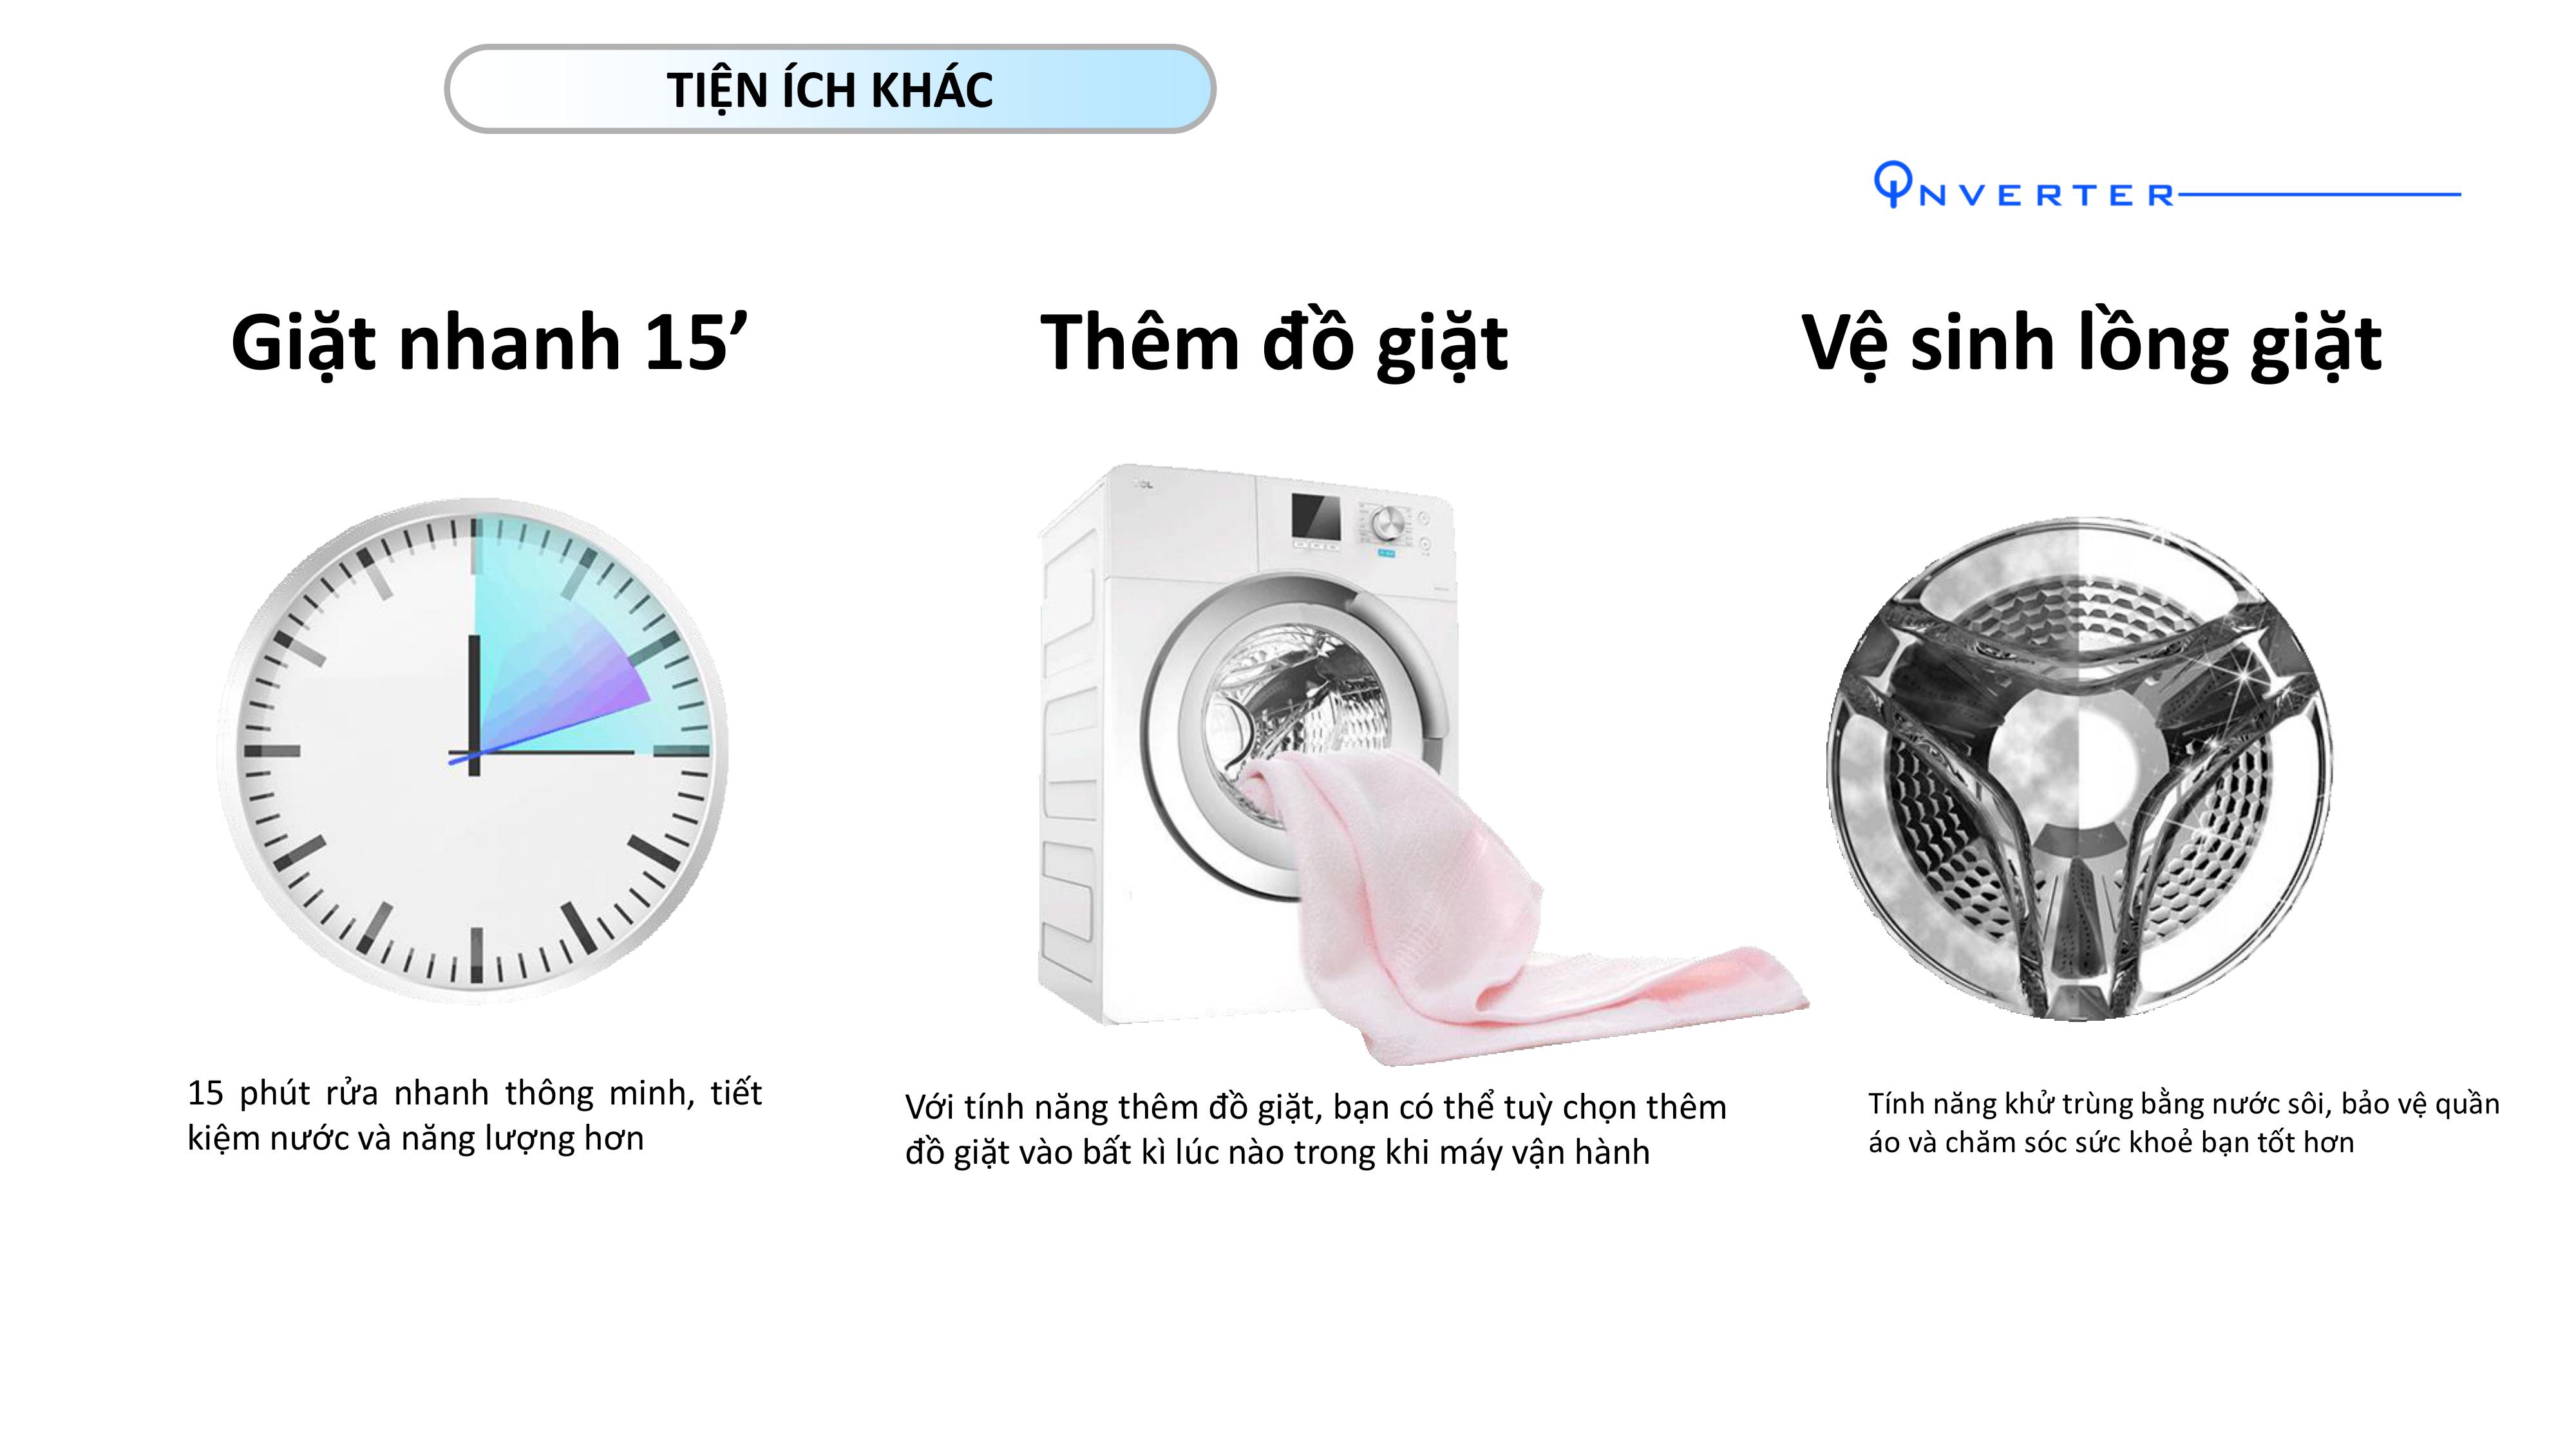 TCL washing-machine k08 Feature